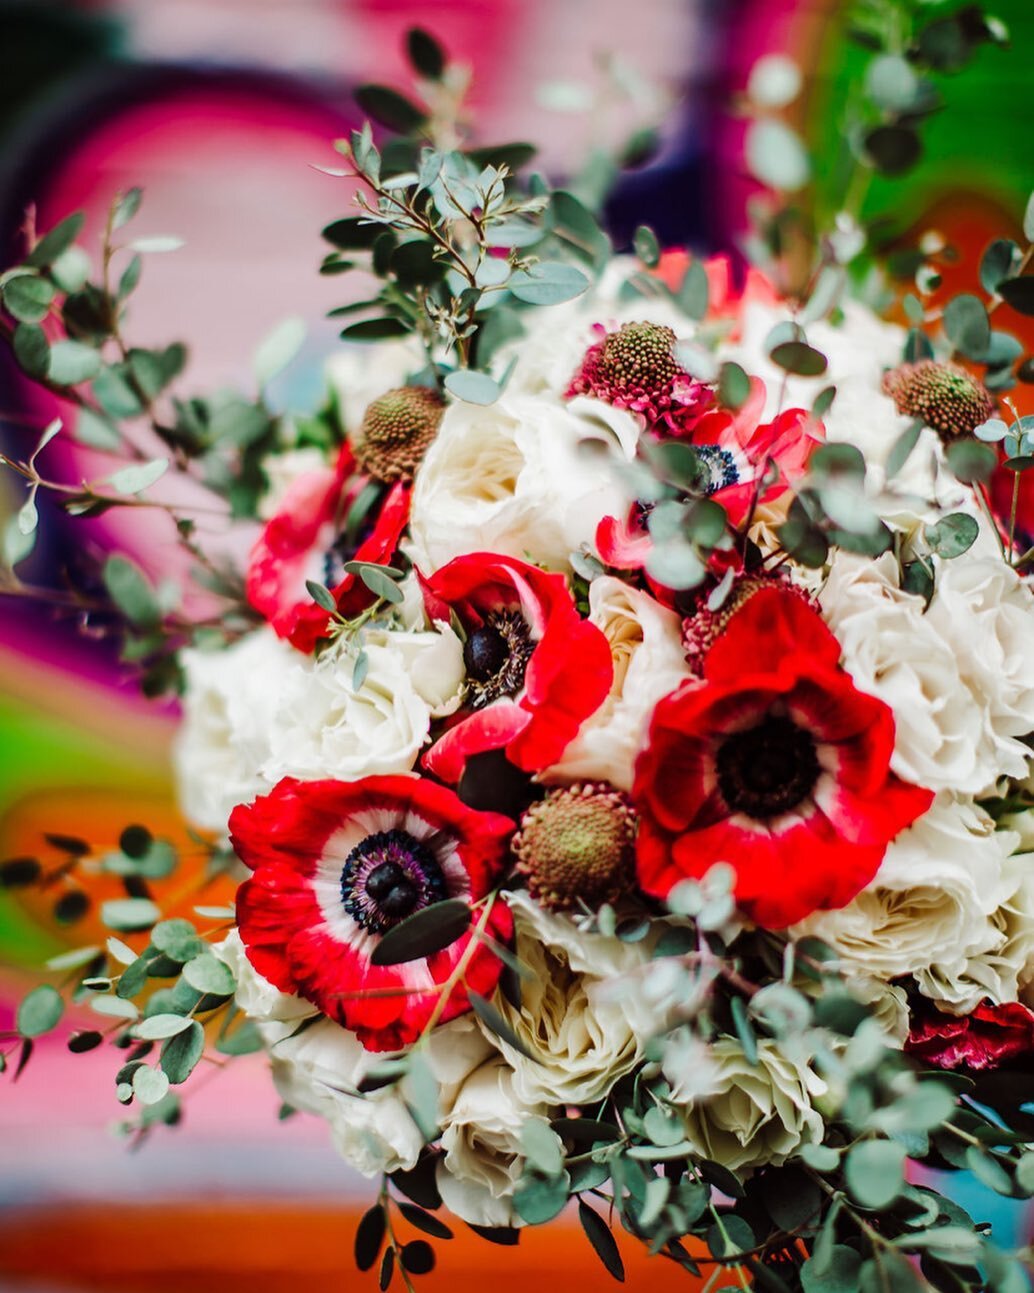 Loving this pop of color 

#weddingflorist #orlandoflorist #floridawedding #florist #floristsofinstagram #poseyblooms #orlandoweddingflorist #orlandoweddingflowers #orlandoweddingfloraldesigner #orlandoweddingdecor #orlandowedding